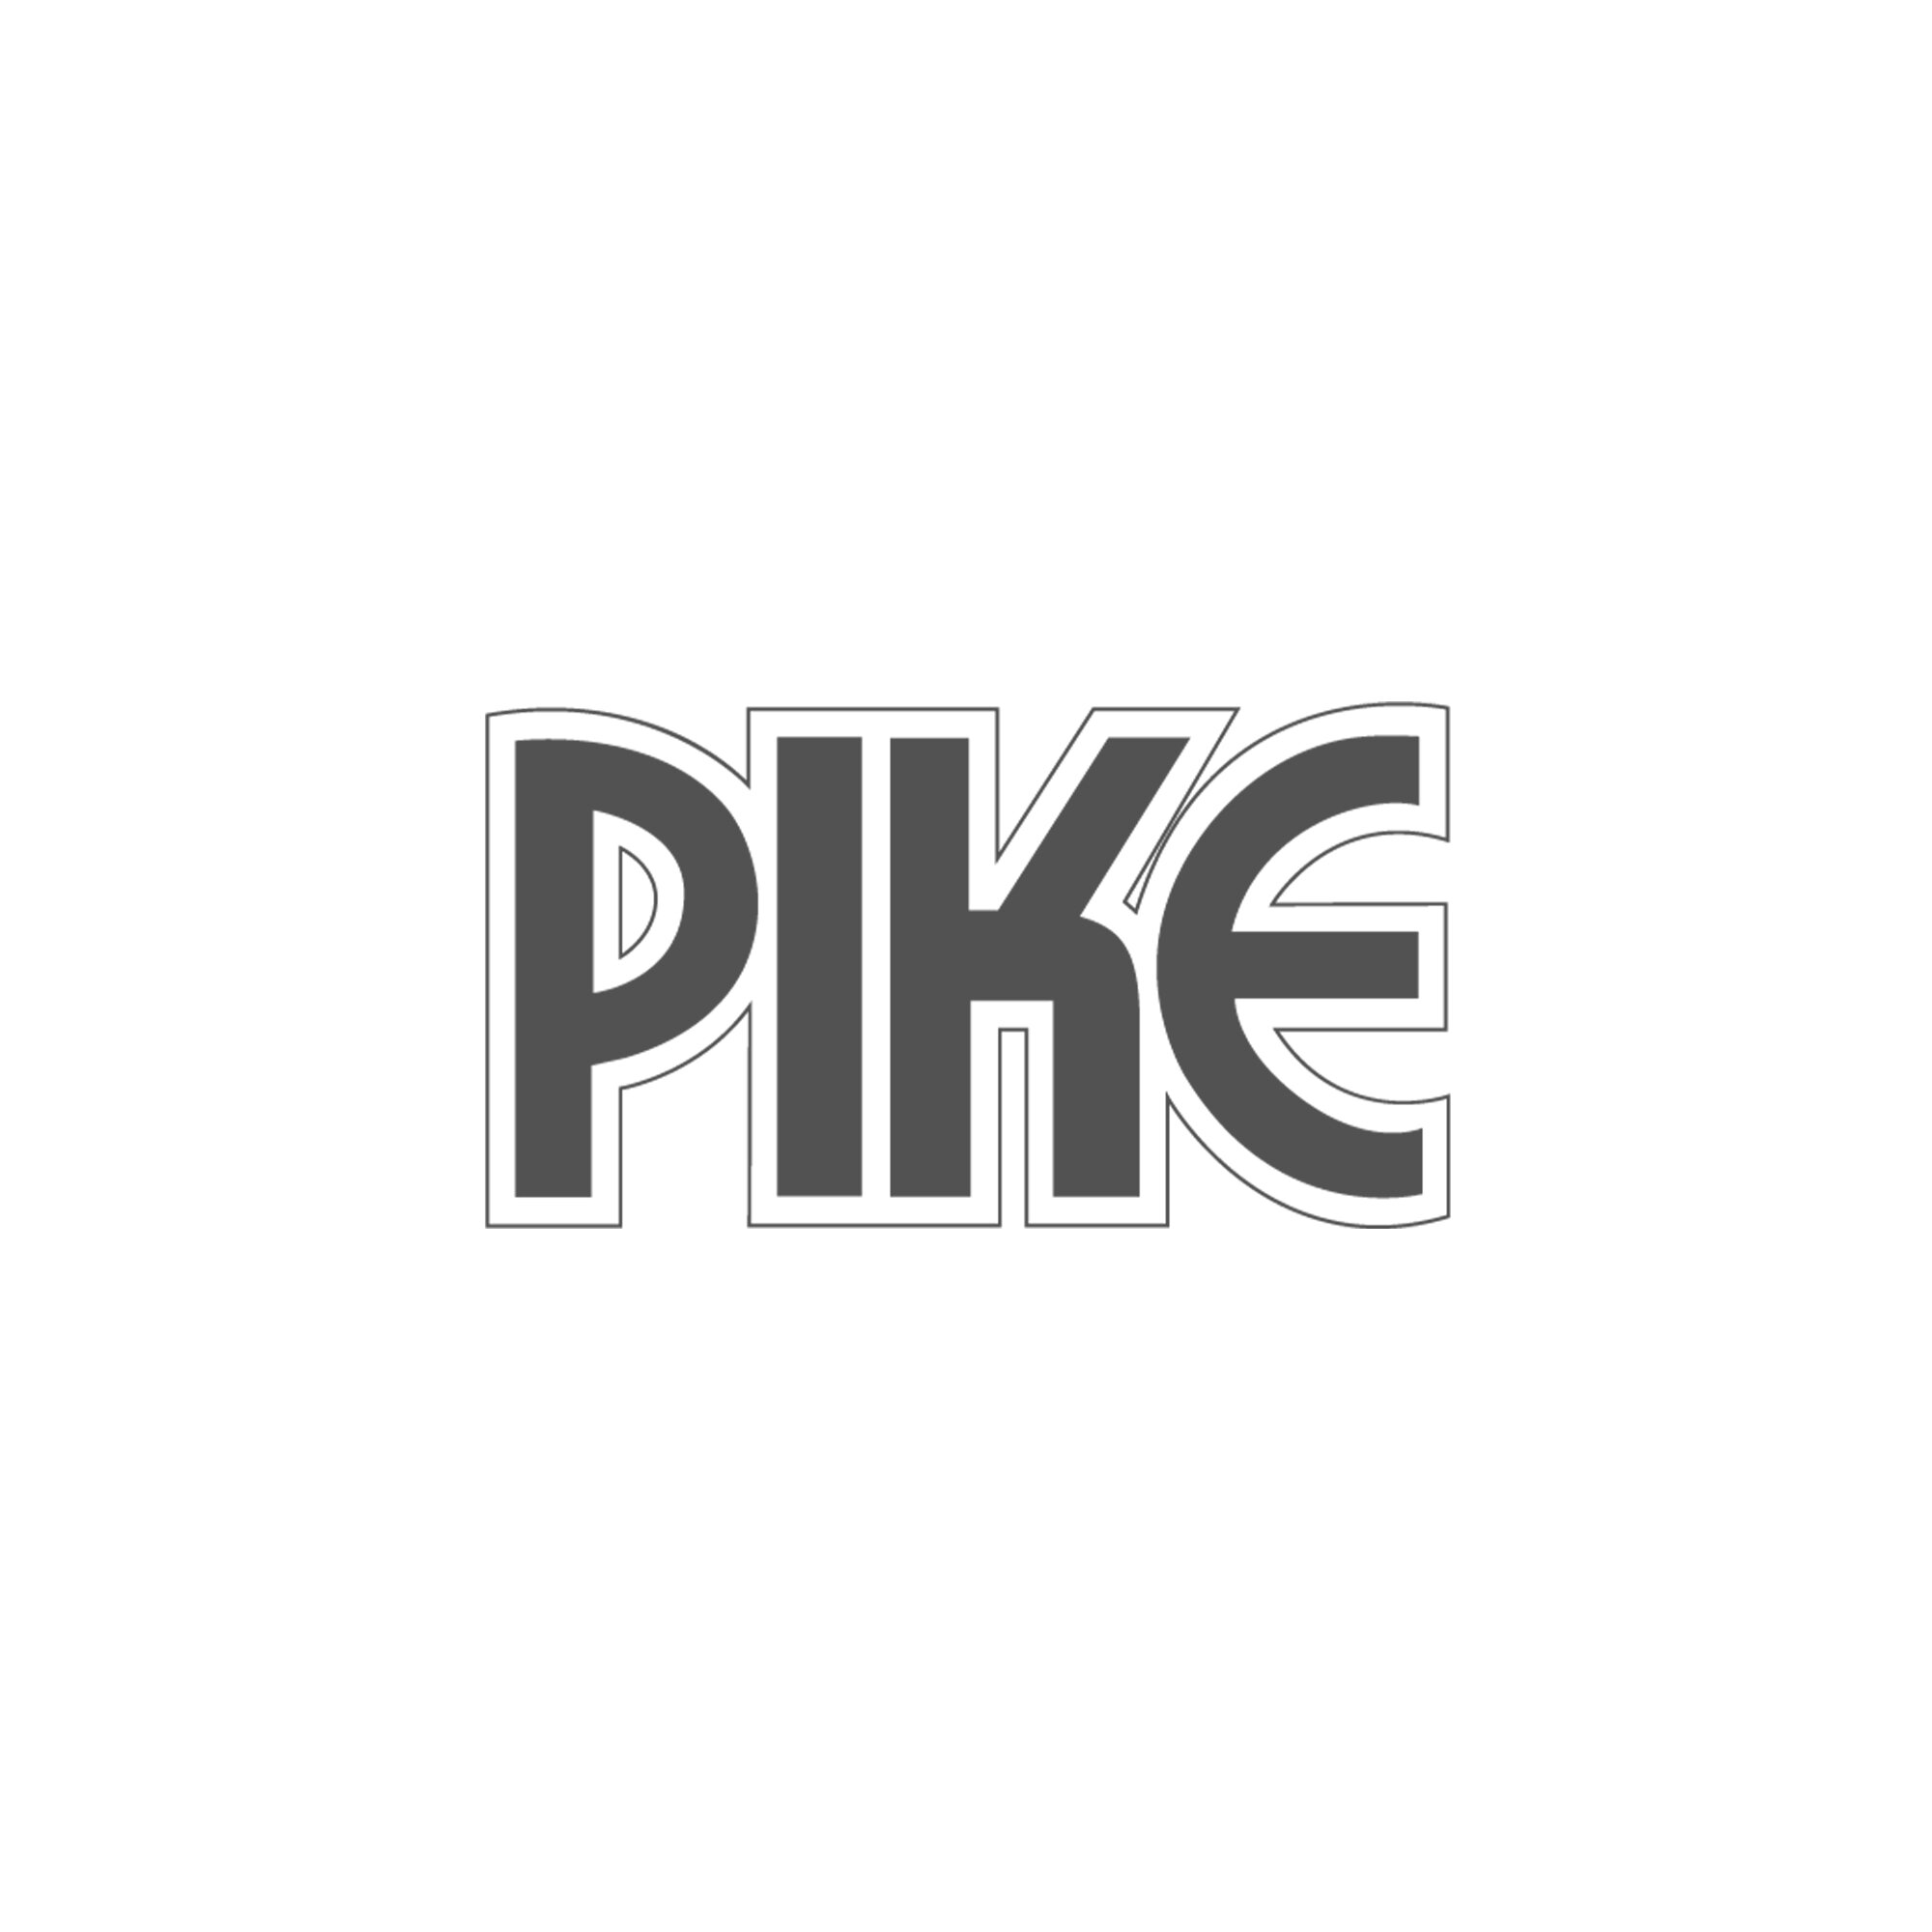 Pike-Electric.jpg